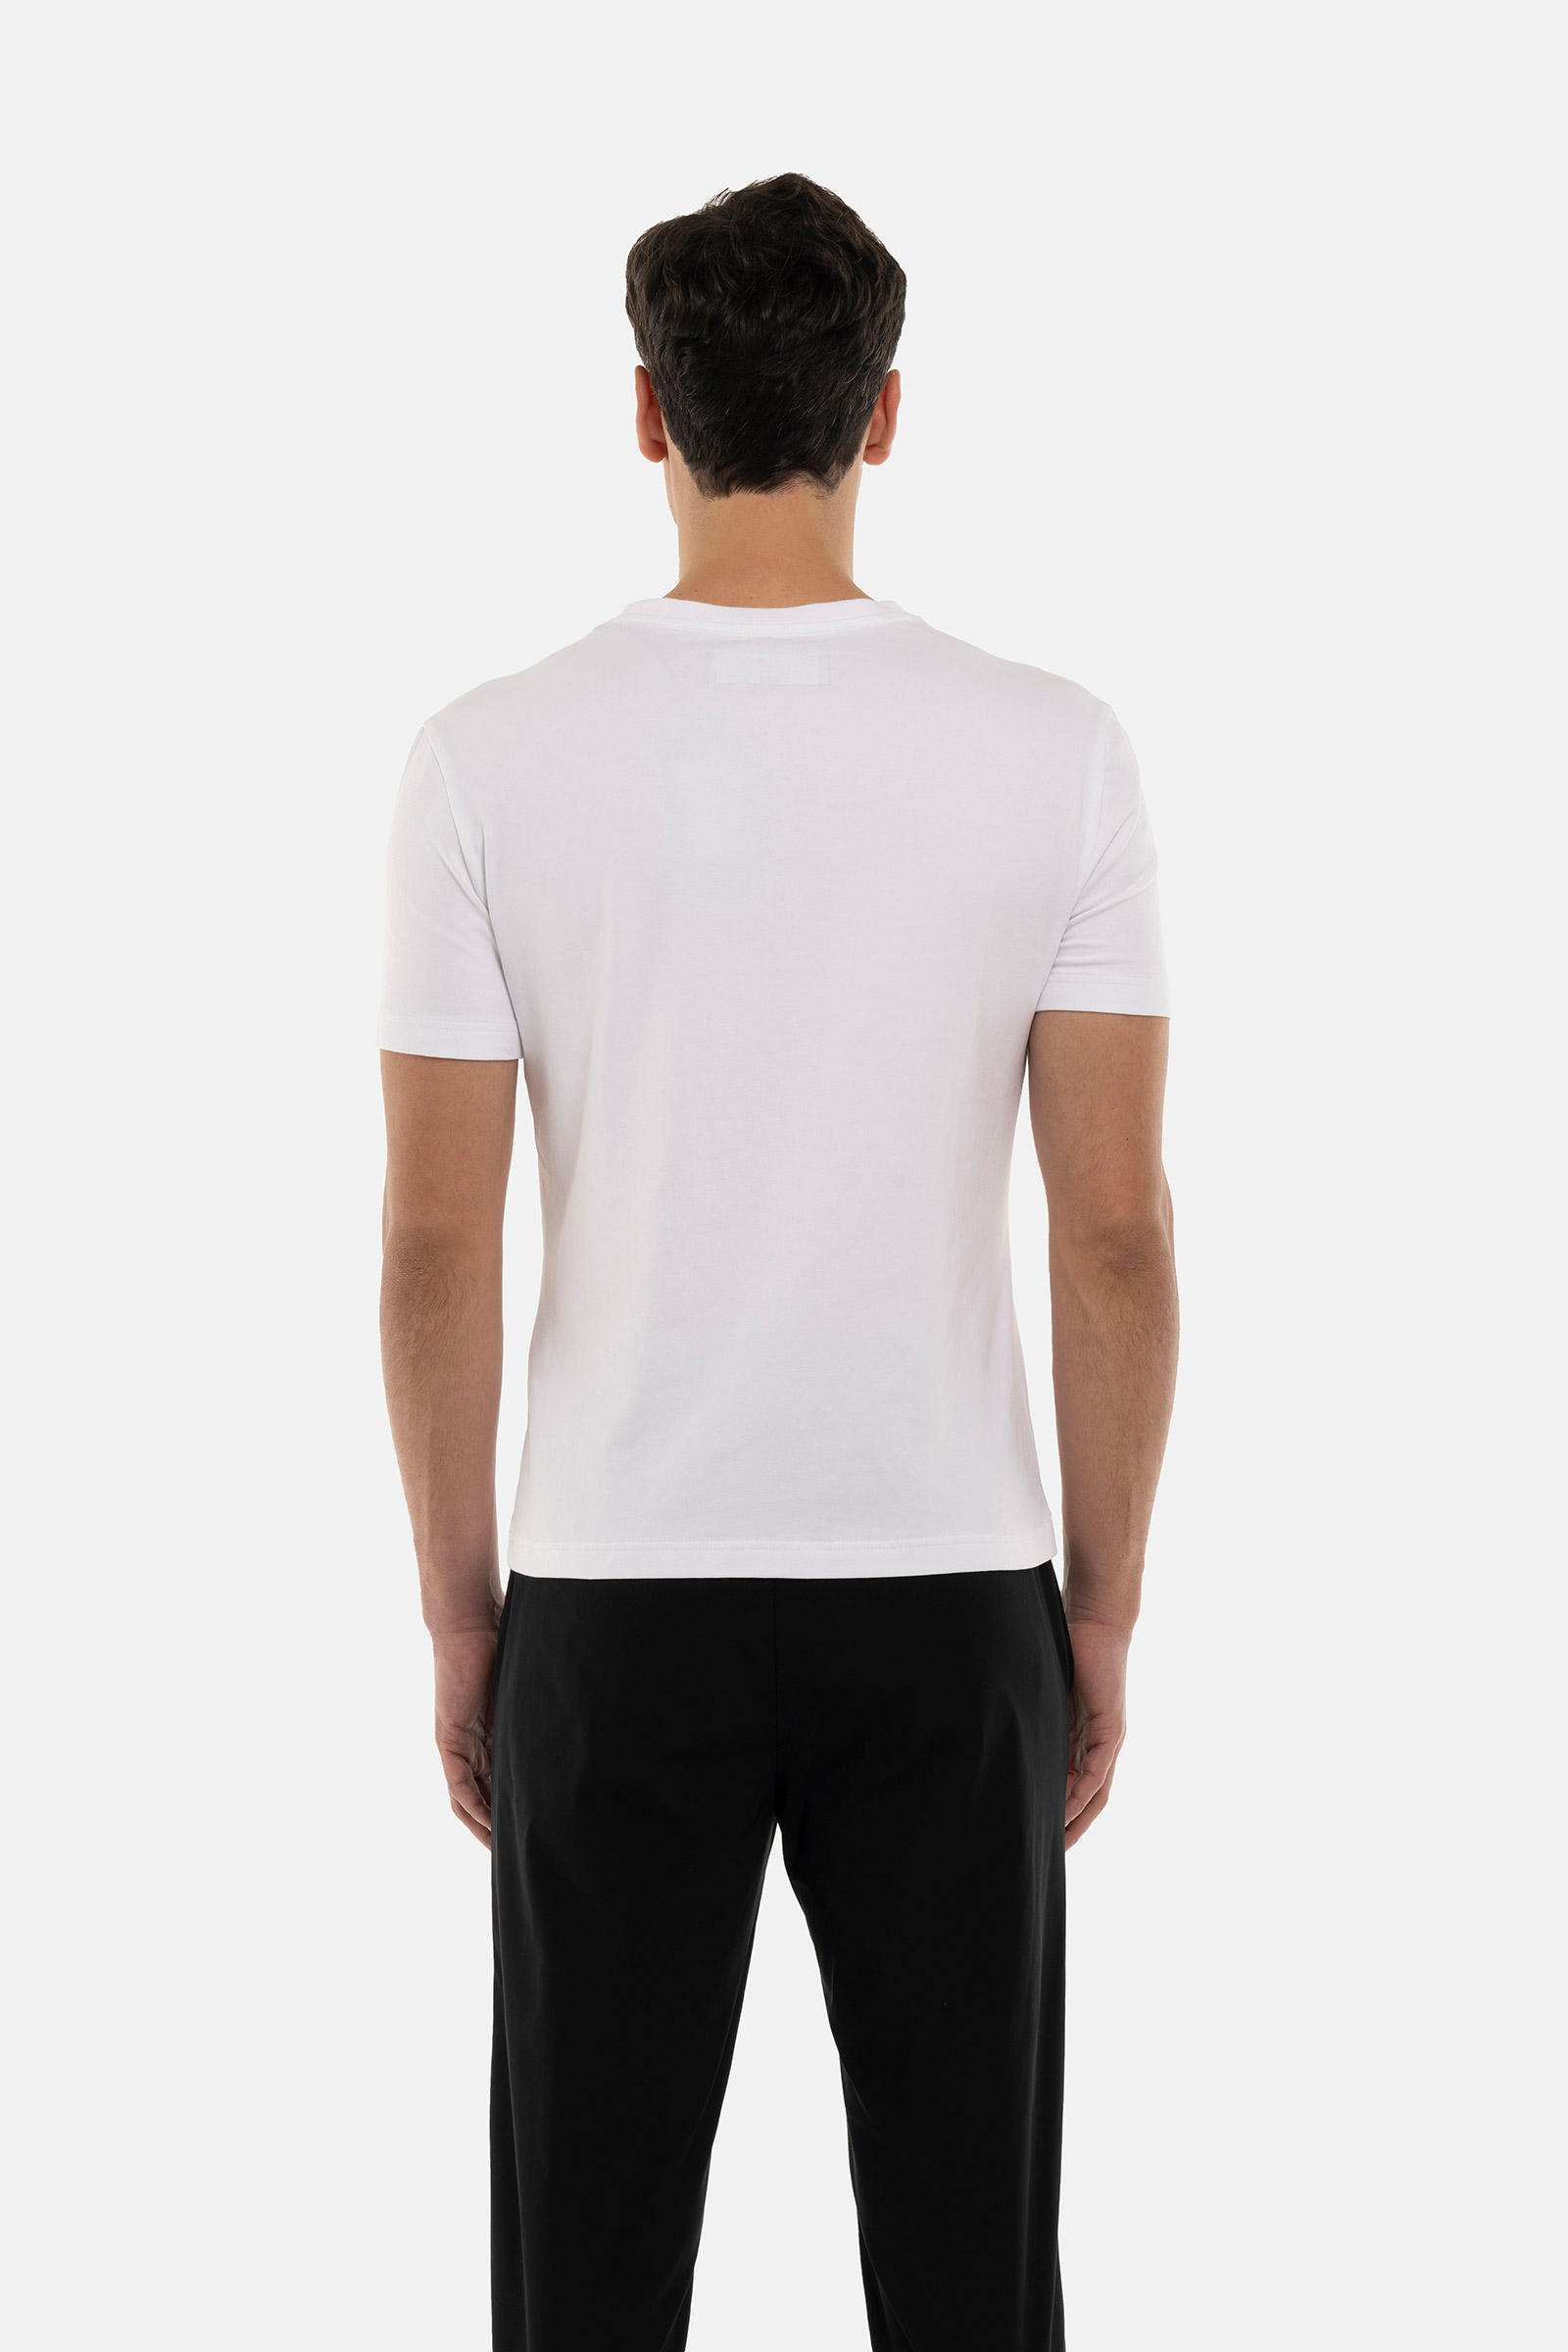 CAMU PIXEL COTTON TEE - WHITE - Hydrogen - Luxury Sportwear